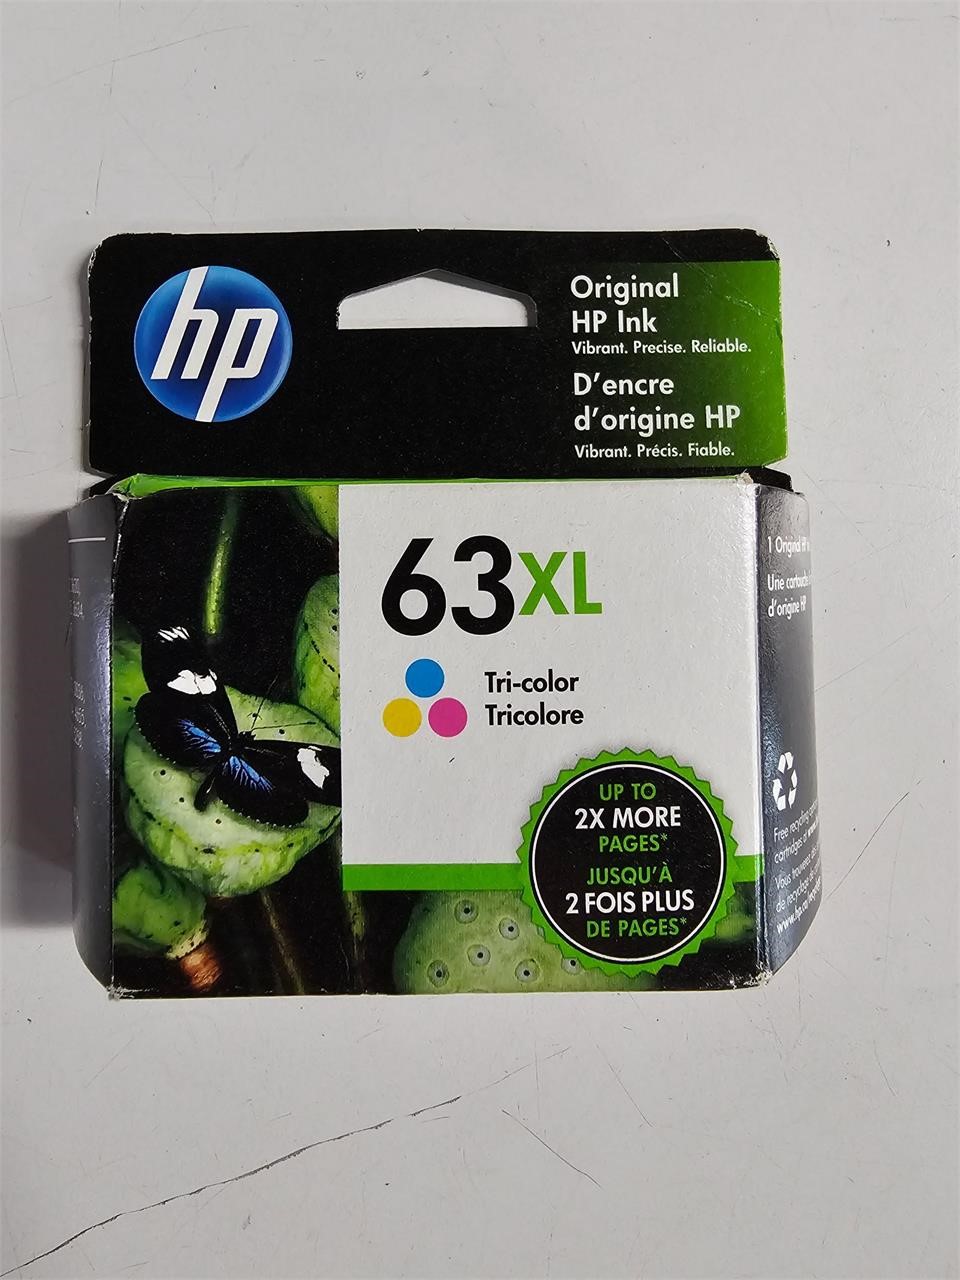 New Sealed HP 63XL Printer Ink